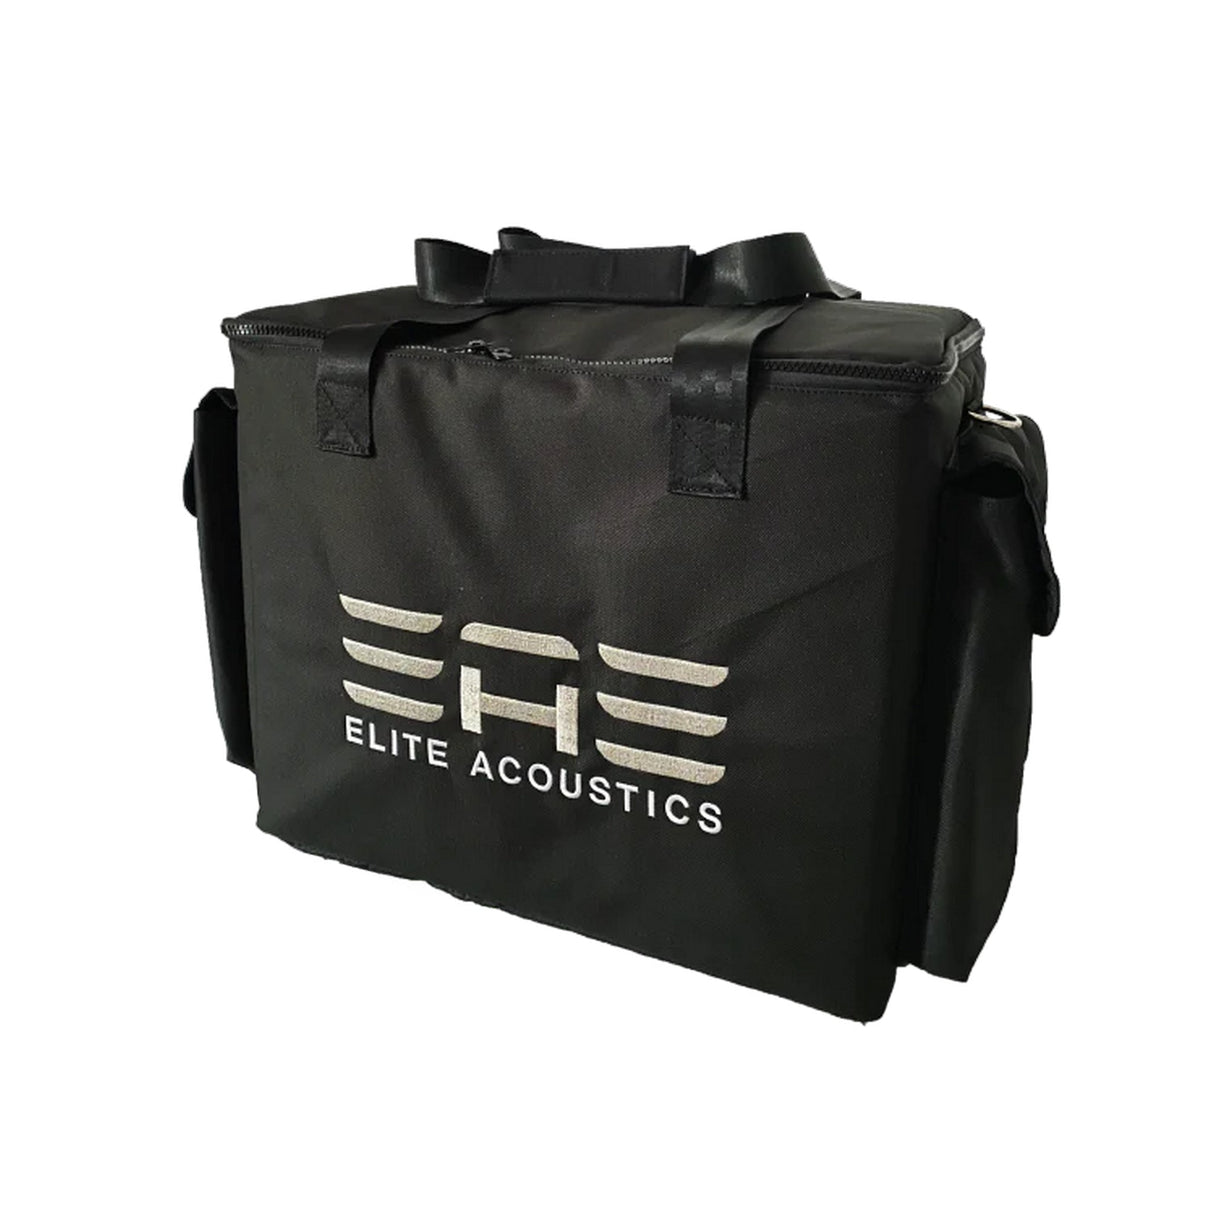 Elite Acoustics ACB-D658 Carrier Bag for D6-58, A1-58, A4-58, and A6-55